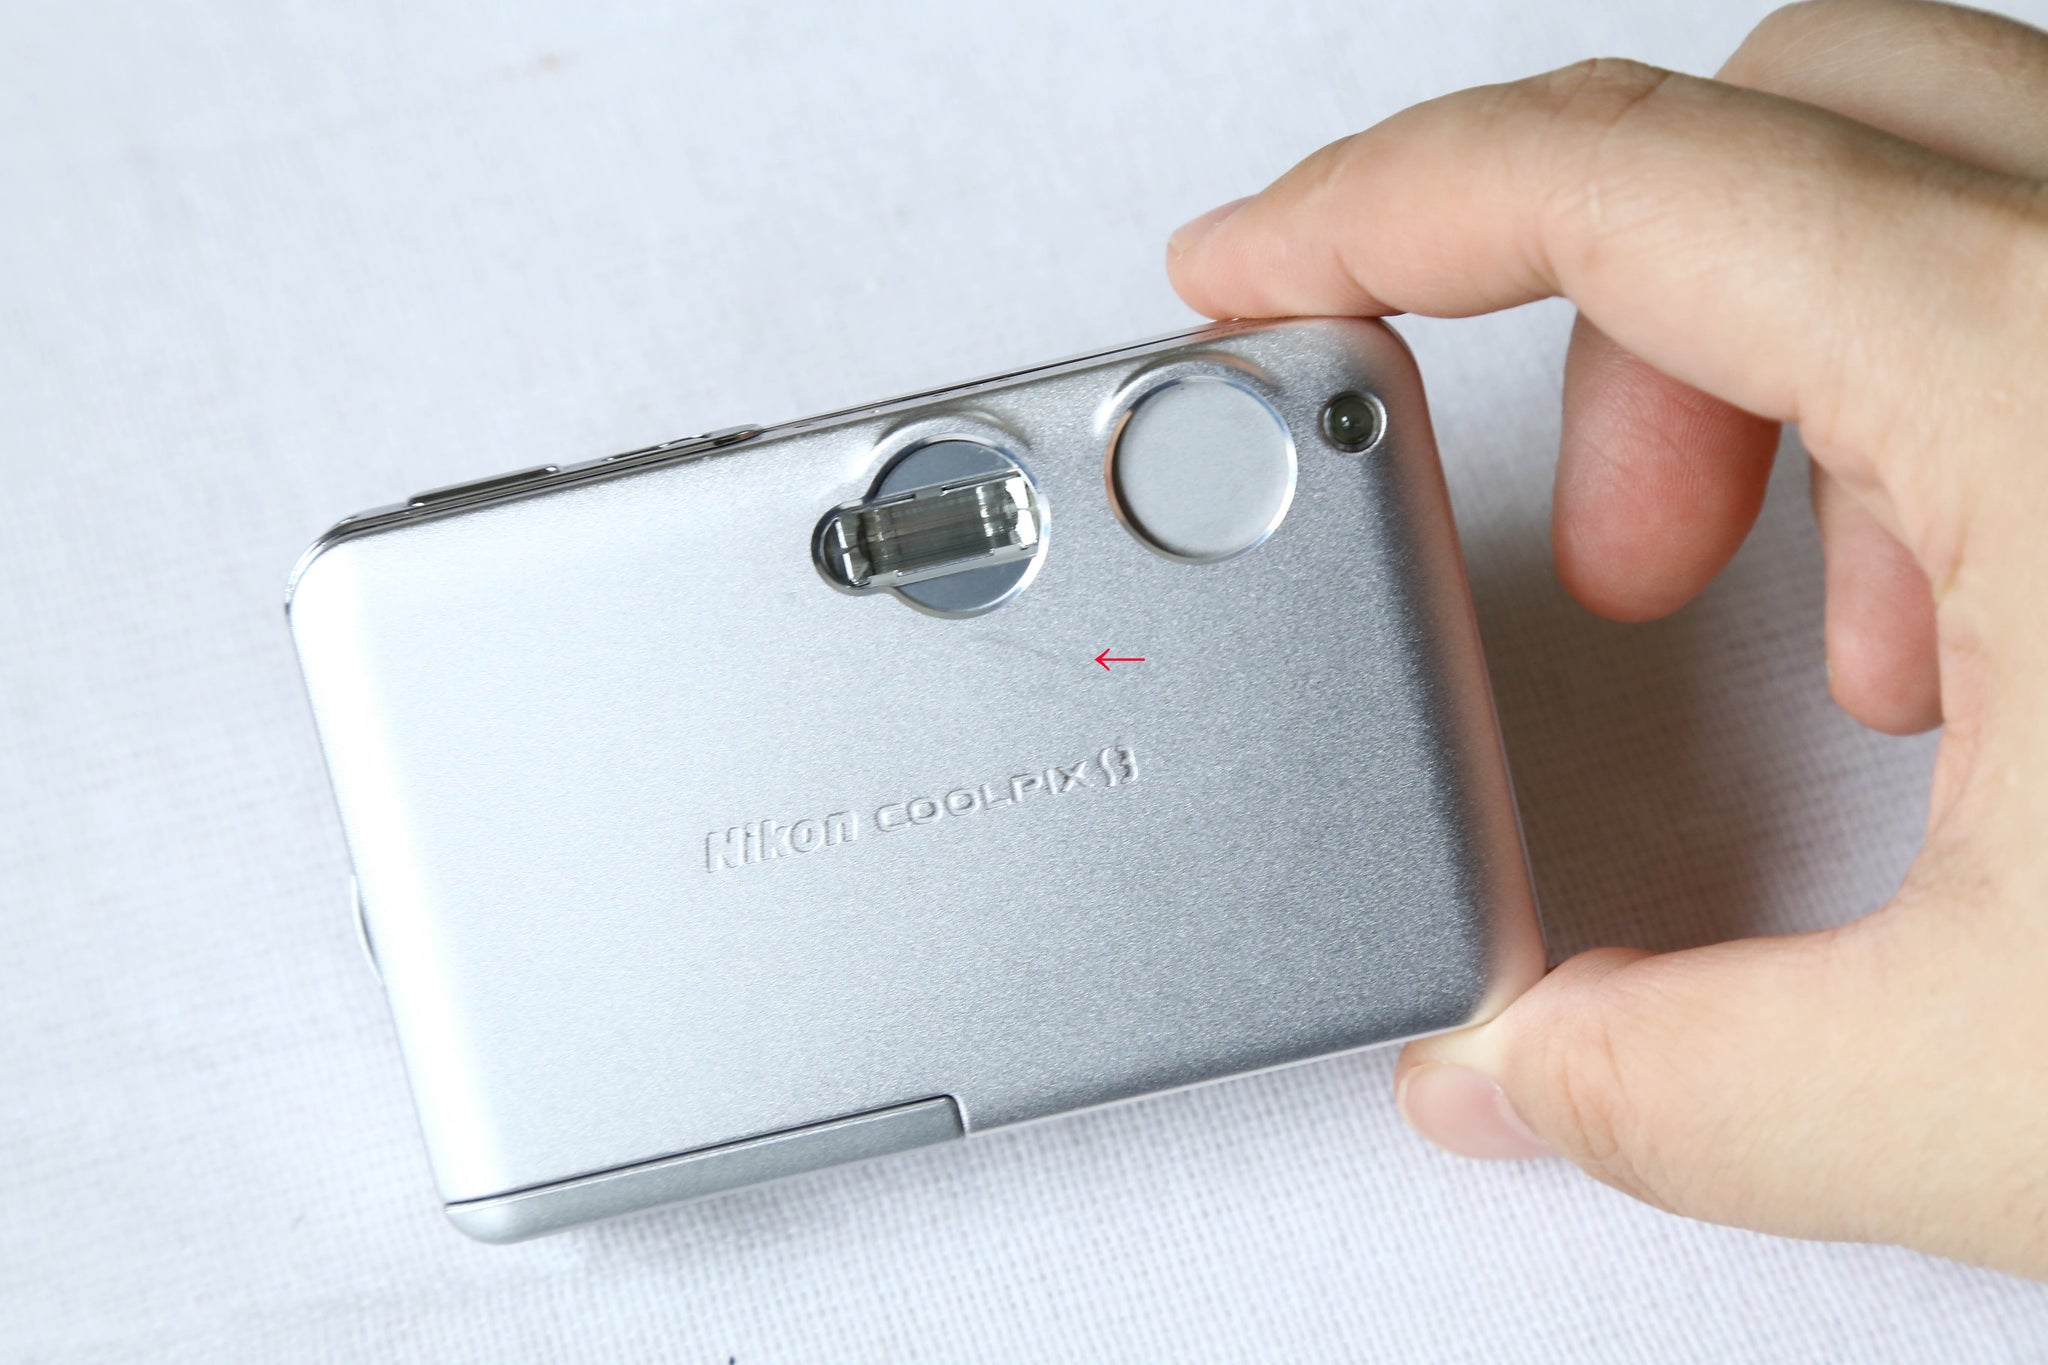 Nikon Coolpix S3【完動品】【実写済み❗️】▪️オールドコンデジ 